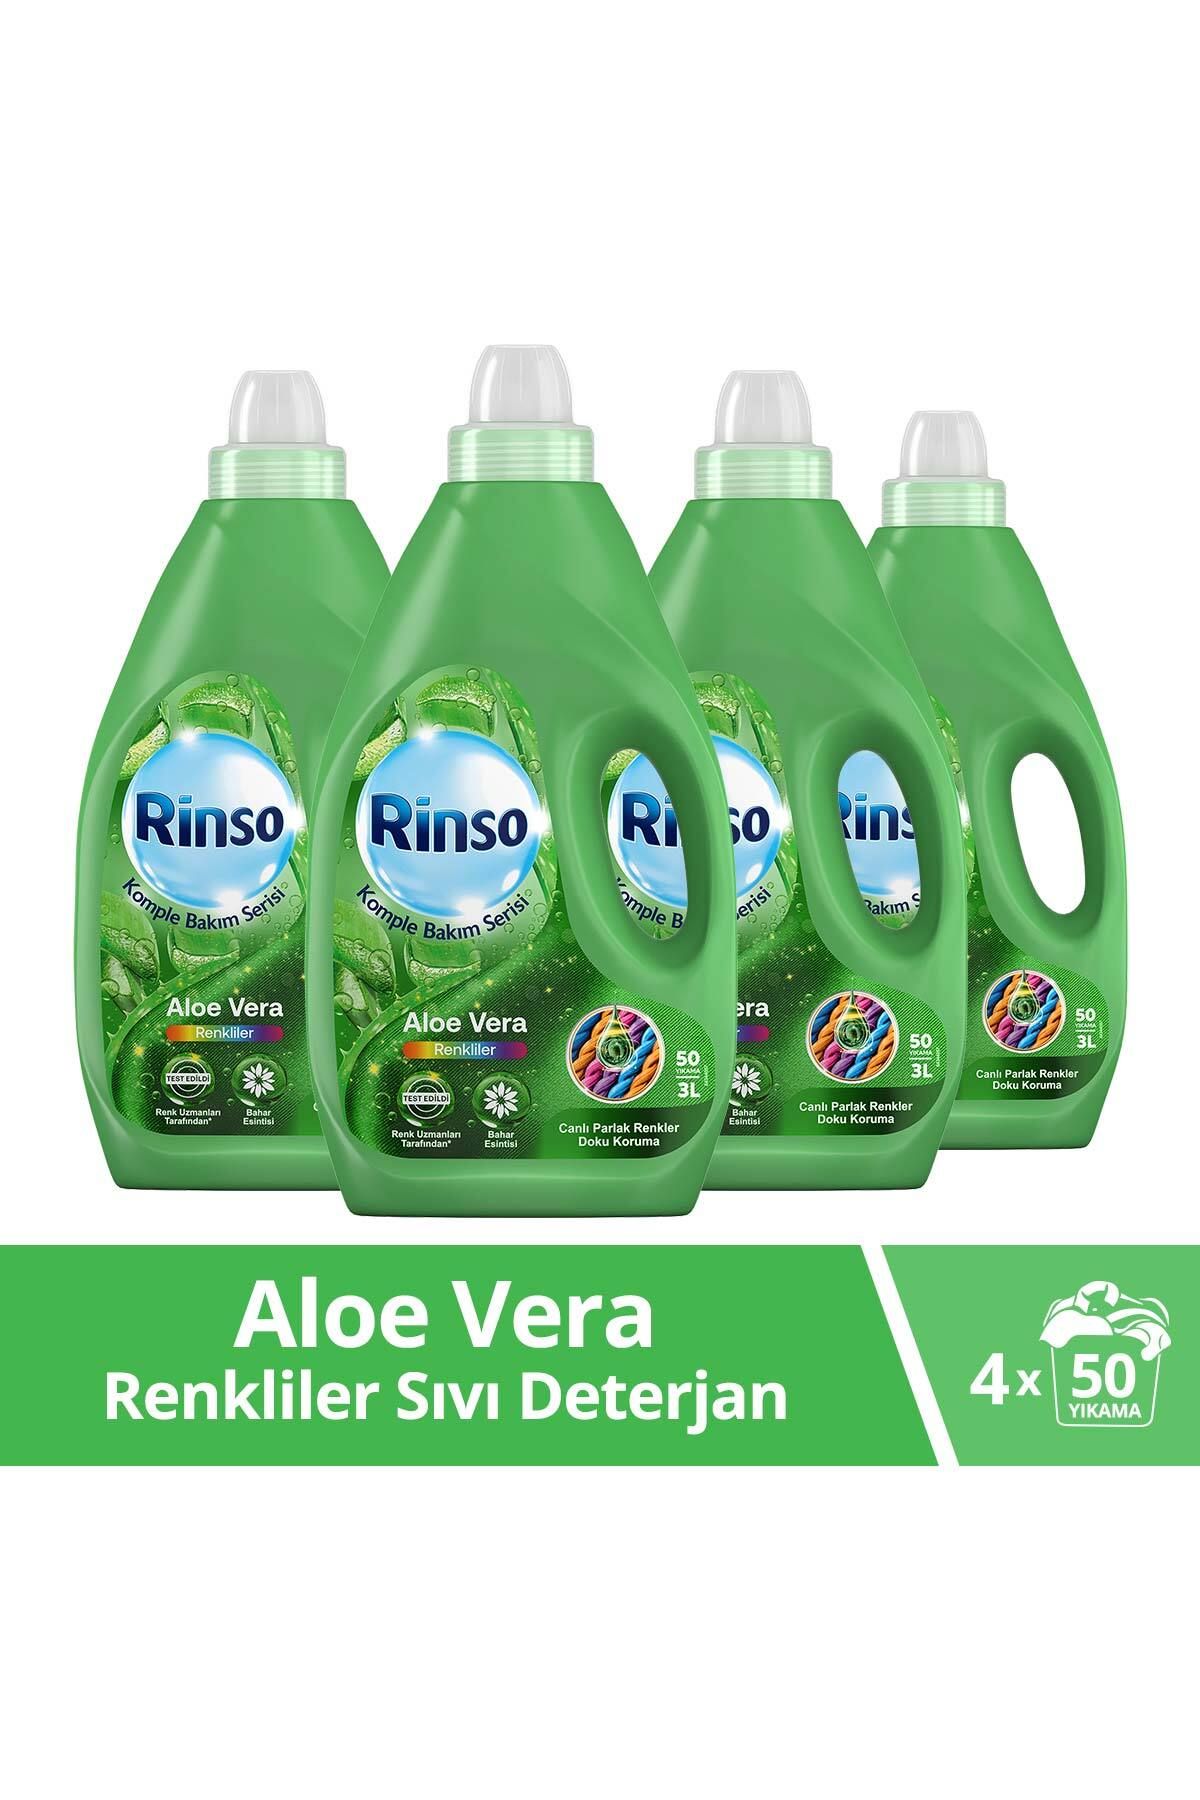 Rinso Sıvı Deterjan Aloe Vera Renkiler 3lt 4 Adet